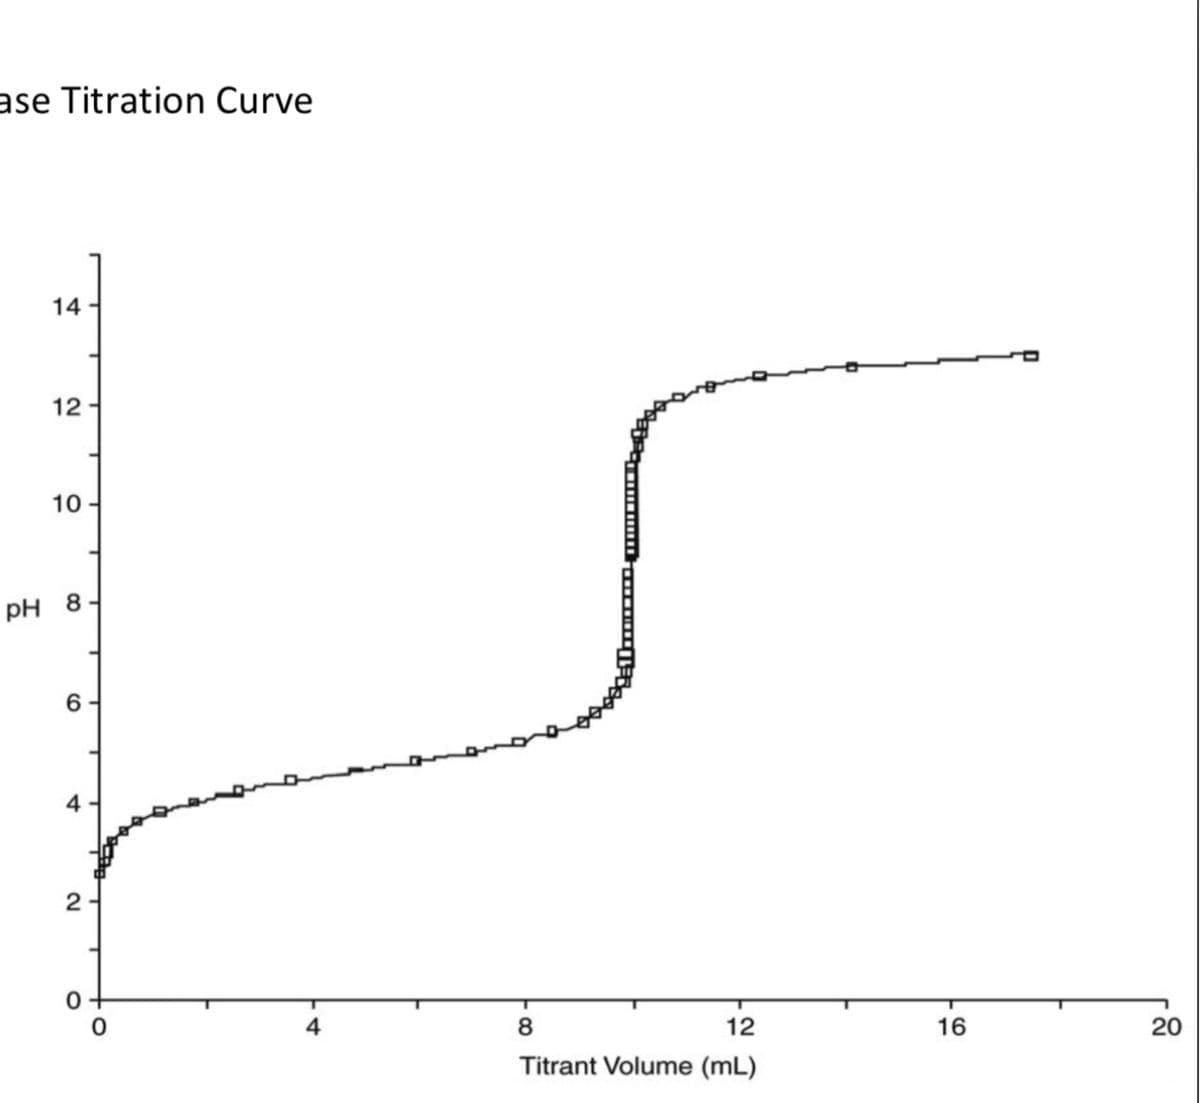 ase Titration Curve
14
12
10-
pH 8
6
4
2
0
0
4
8
12
Titrant Volume (mL)
16
20